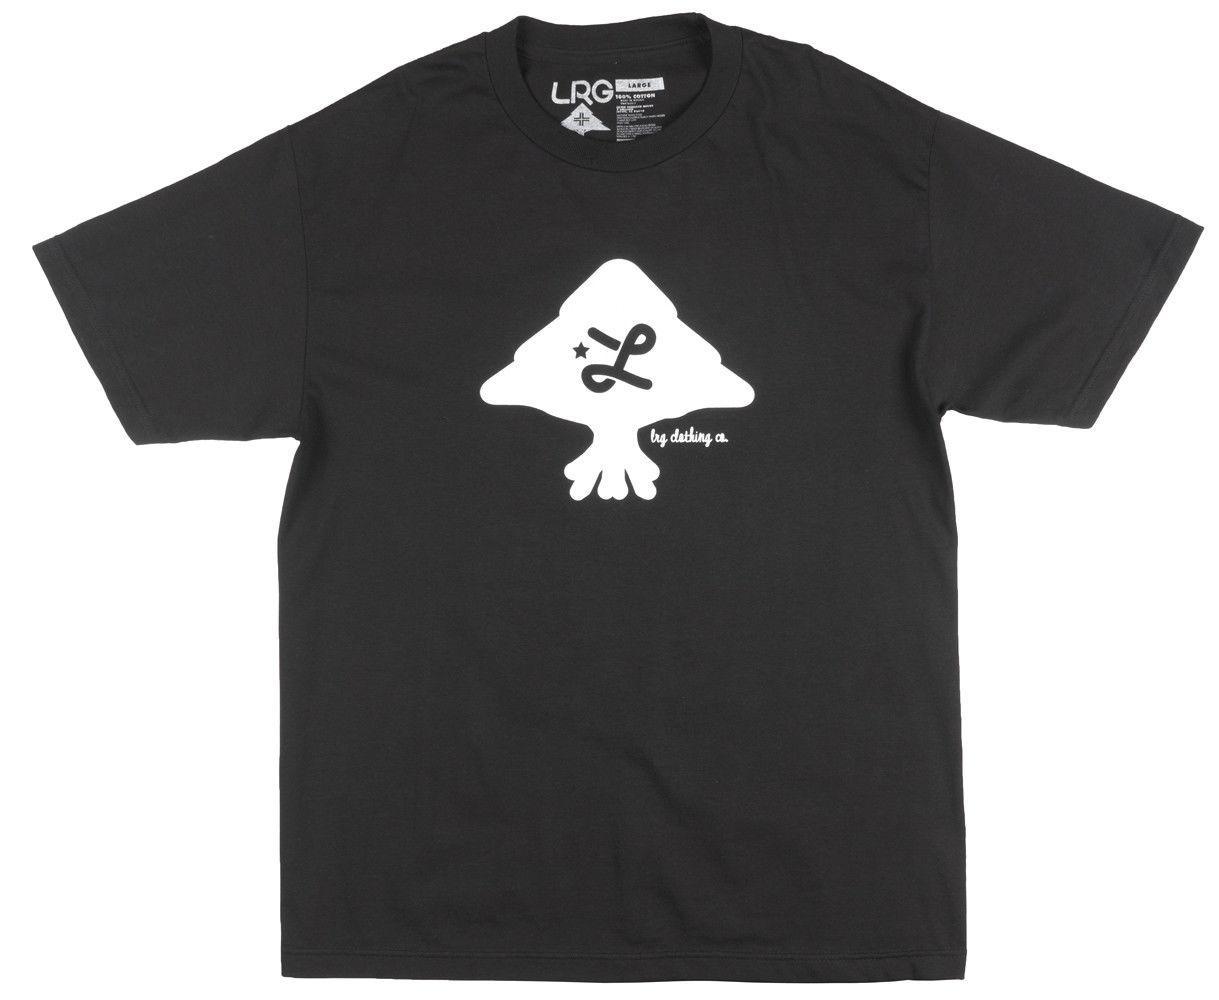 Cool LRG Logo - Details Zu LRG Tree Logo Branded T Shirt Lifted Research Mens Black ...